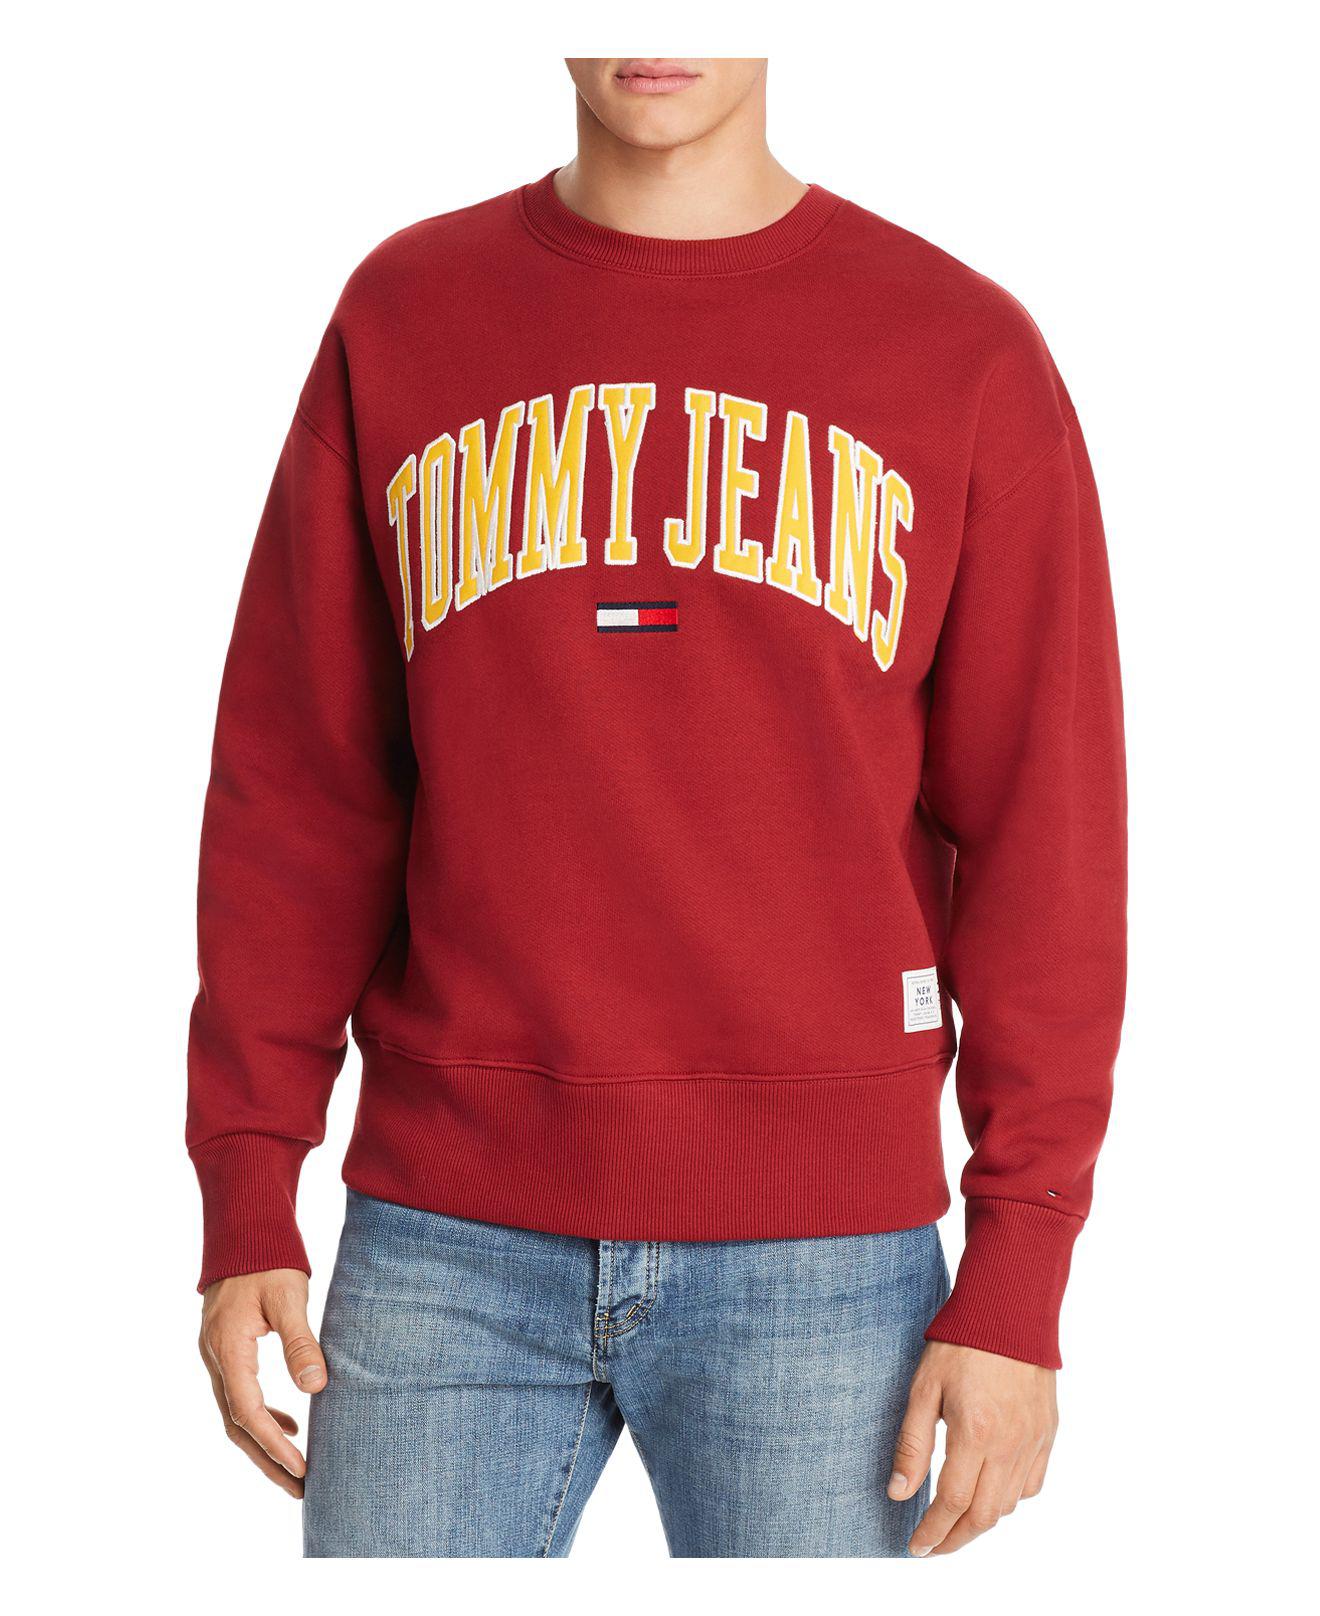 Buy > collegiate tommy hilfiger sweatshirt > in stock